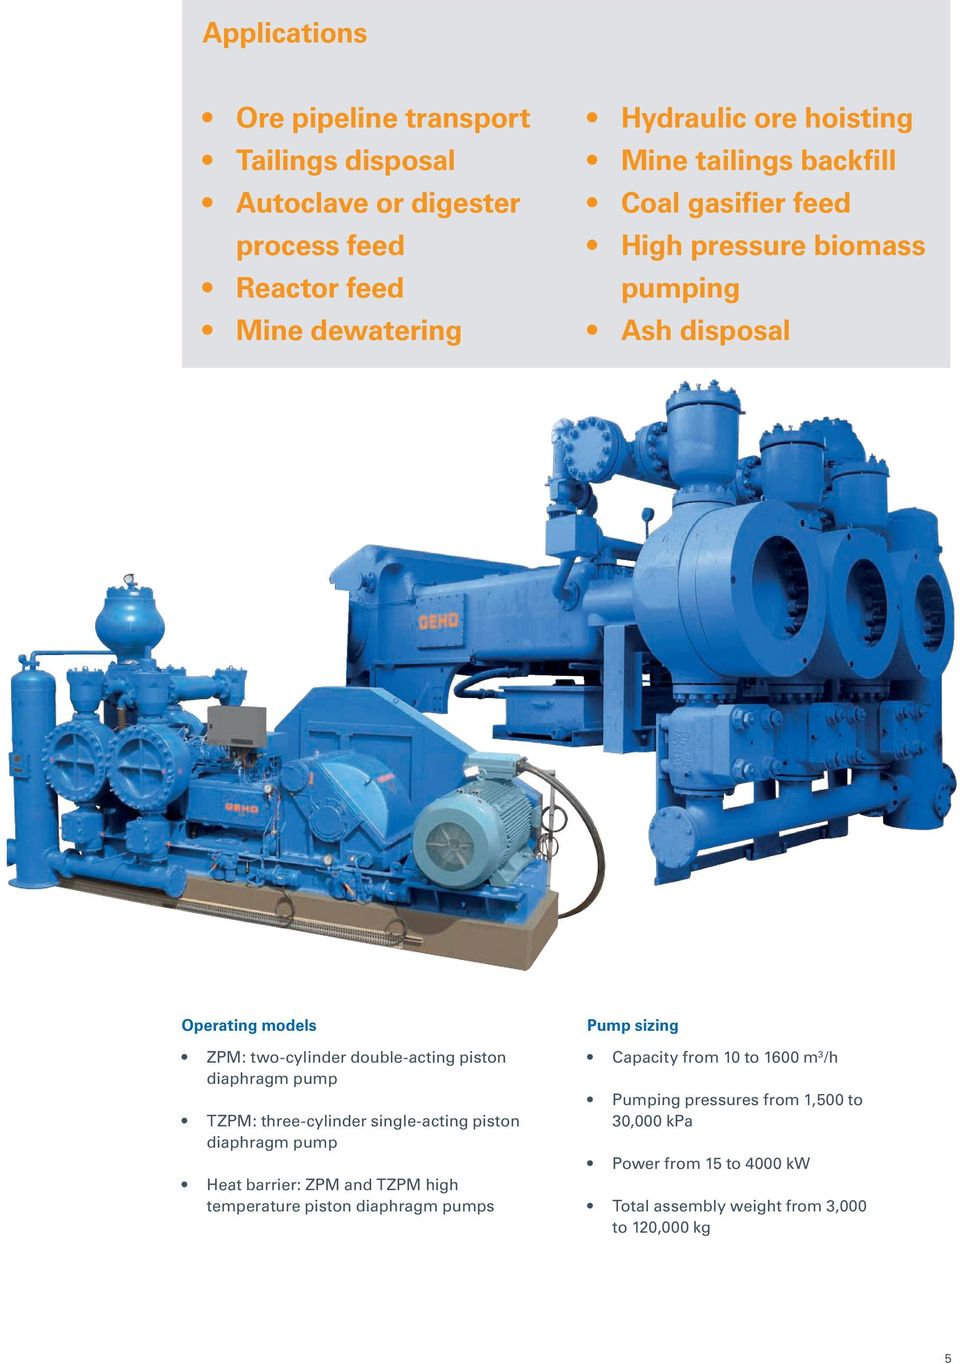 Minerals. GEHO Piston diaphragm pumps. Positive displacement slurry pumps  First choice for high efficiency abrasive slurry pumping - PDF Free Download